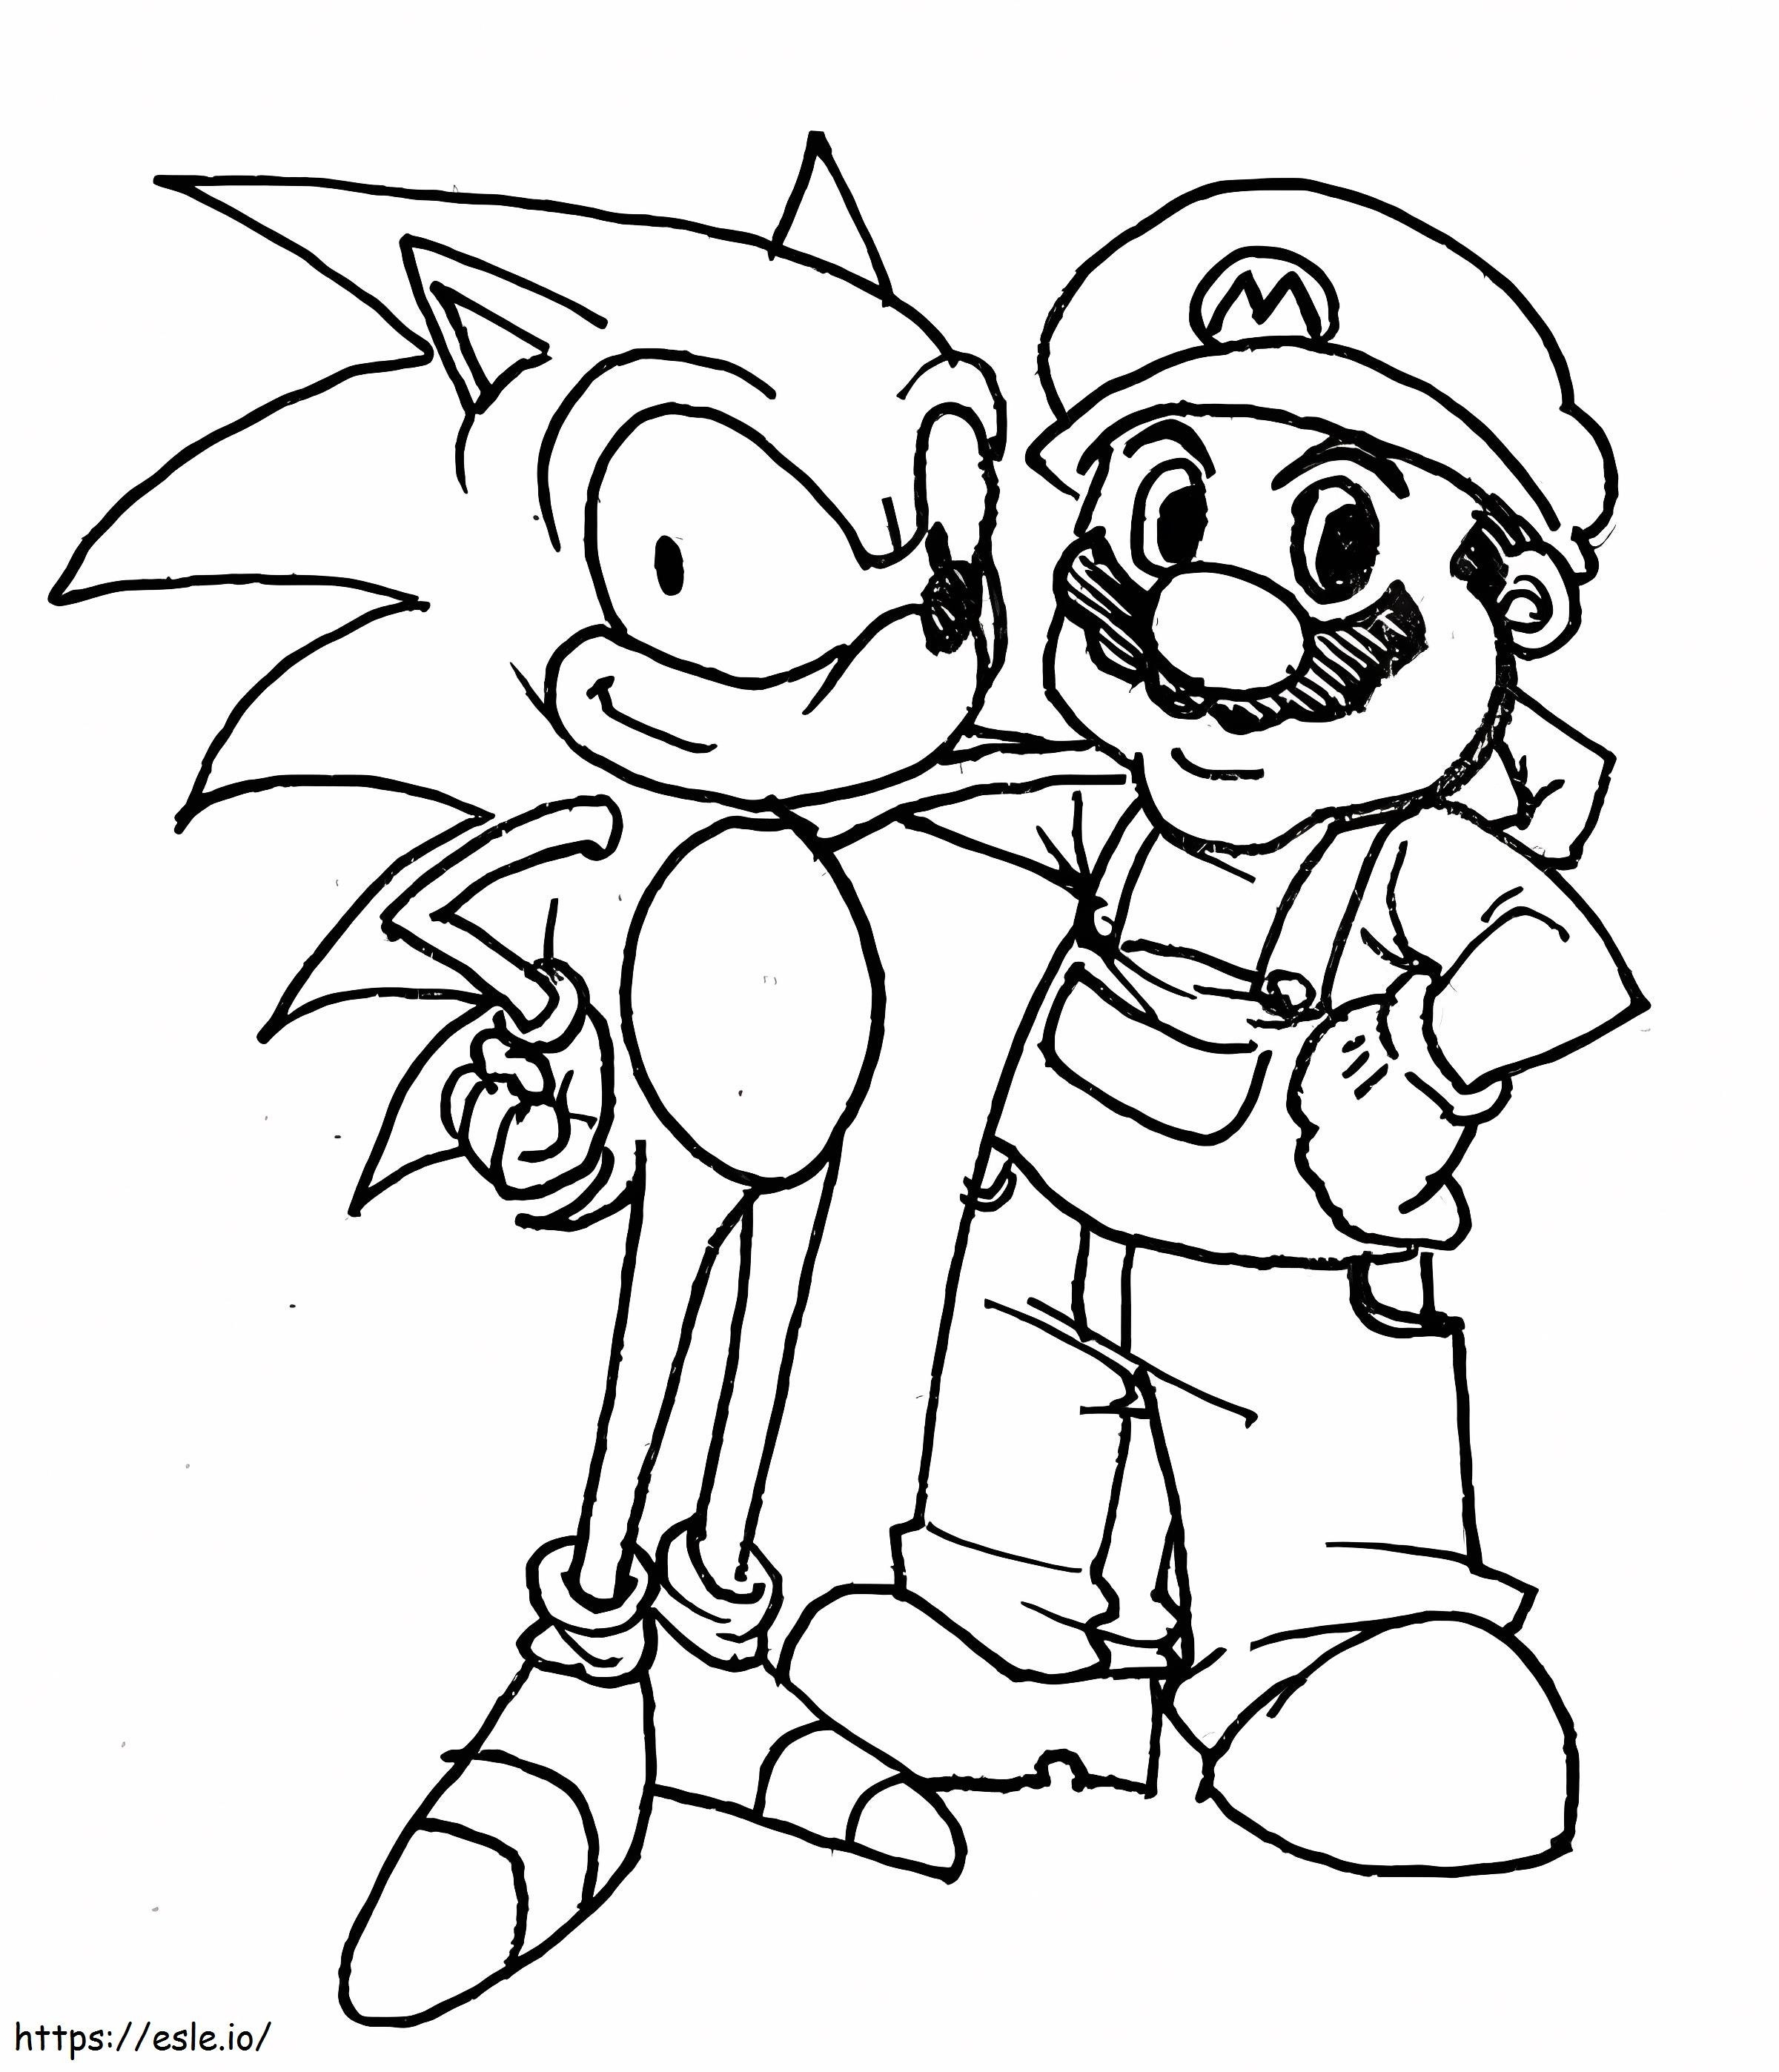 Mario cu Sonic de colorat